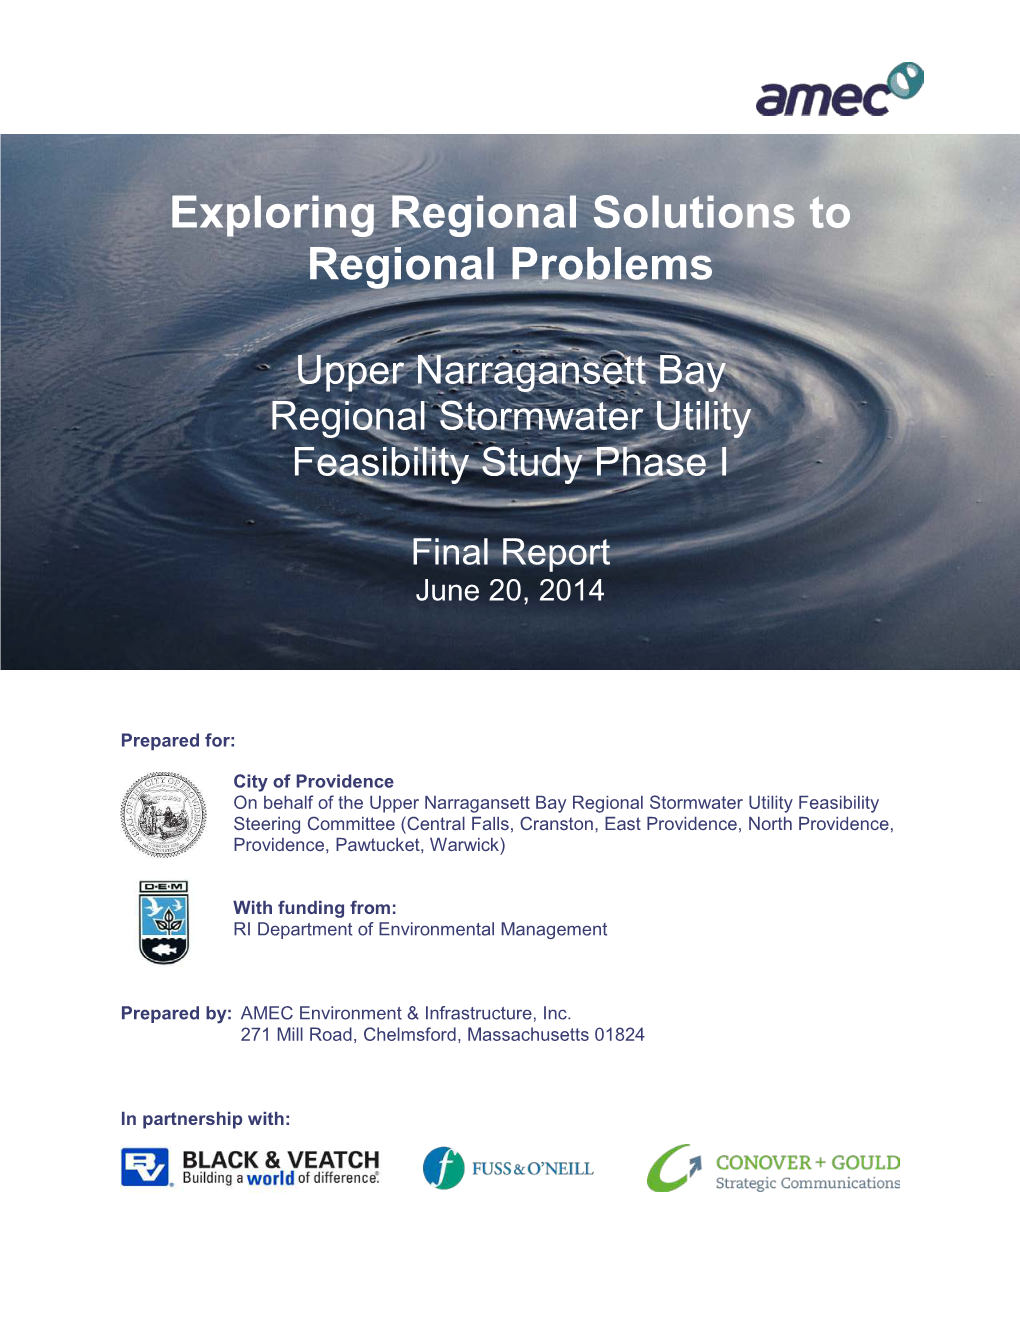 Upper Narragansett Bay Regional Stormwater Feasibility Study Phase I